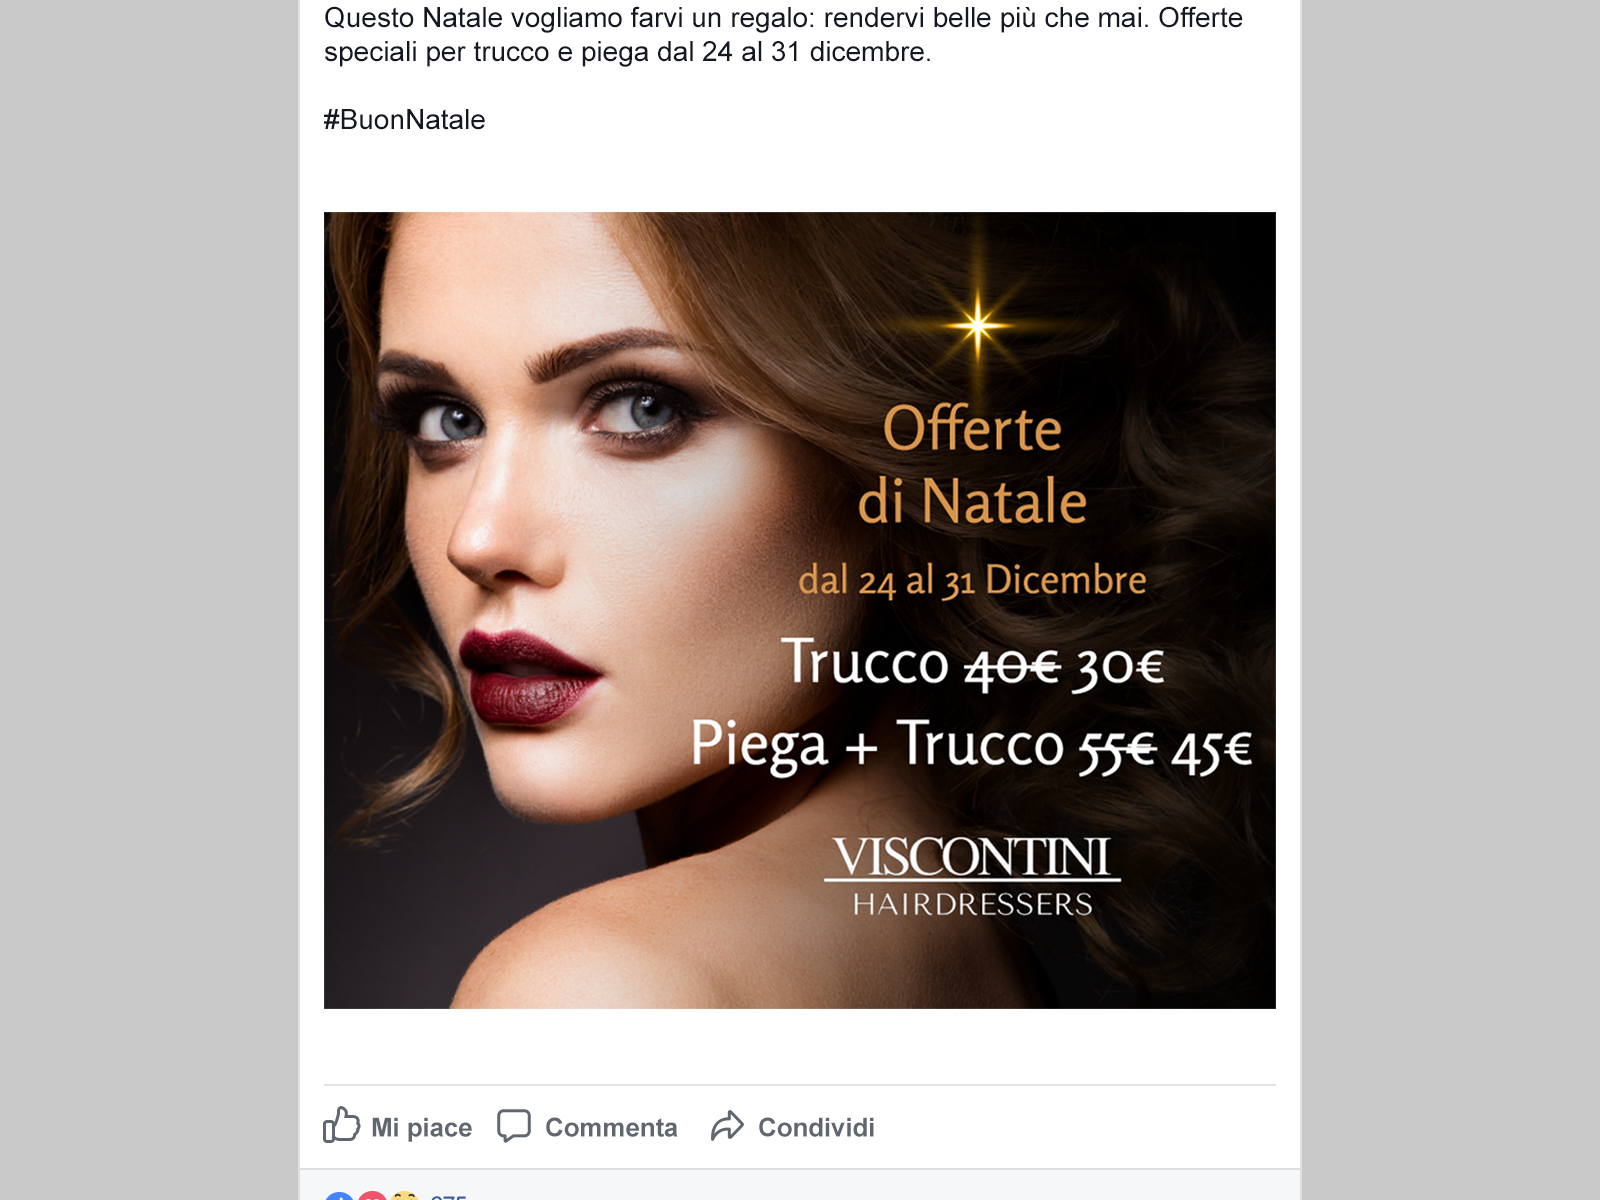 Locandina Facebook Viscontini Hairdressers